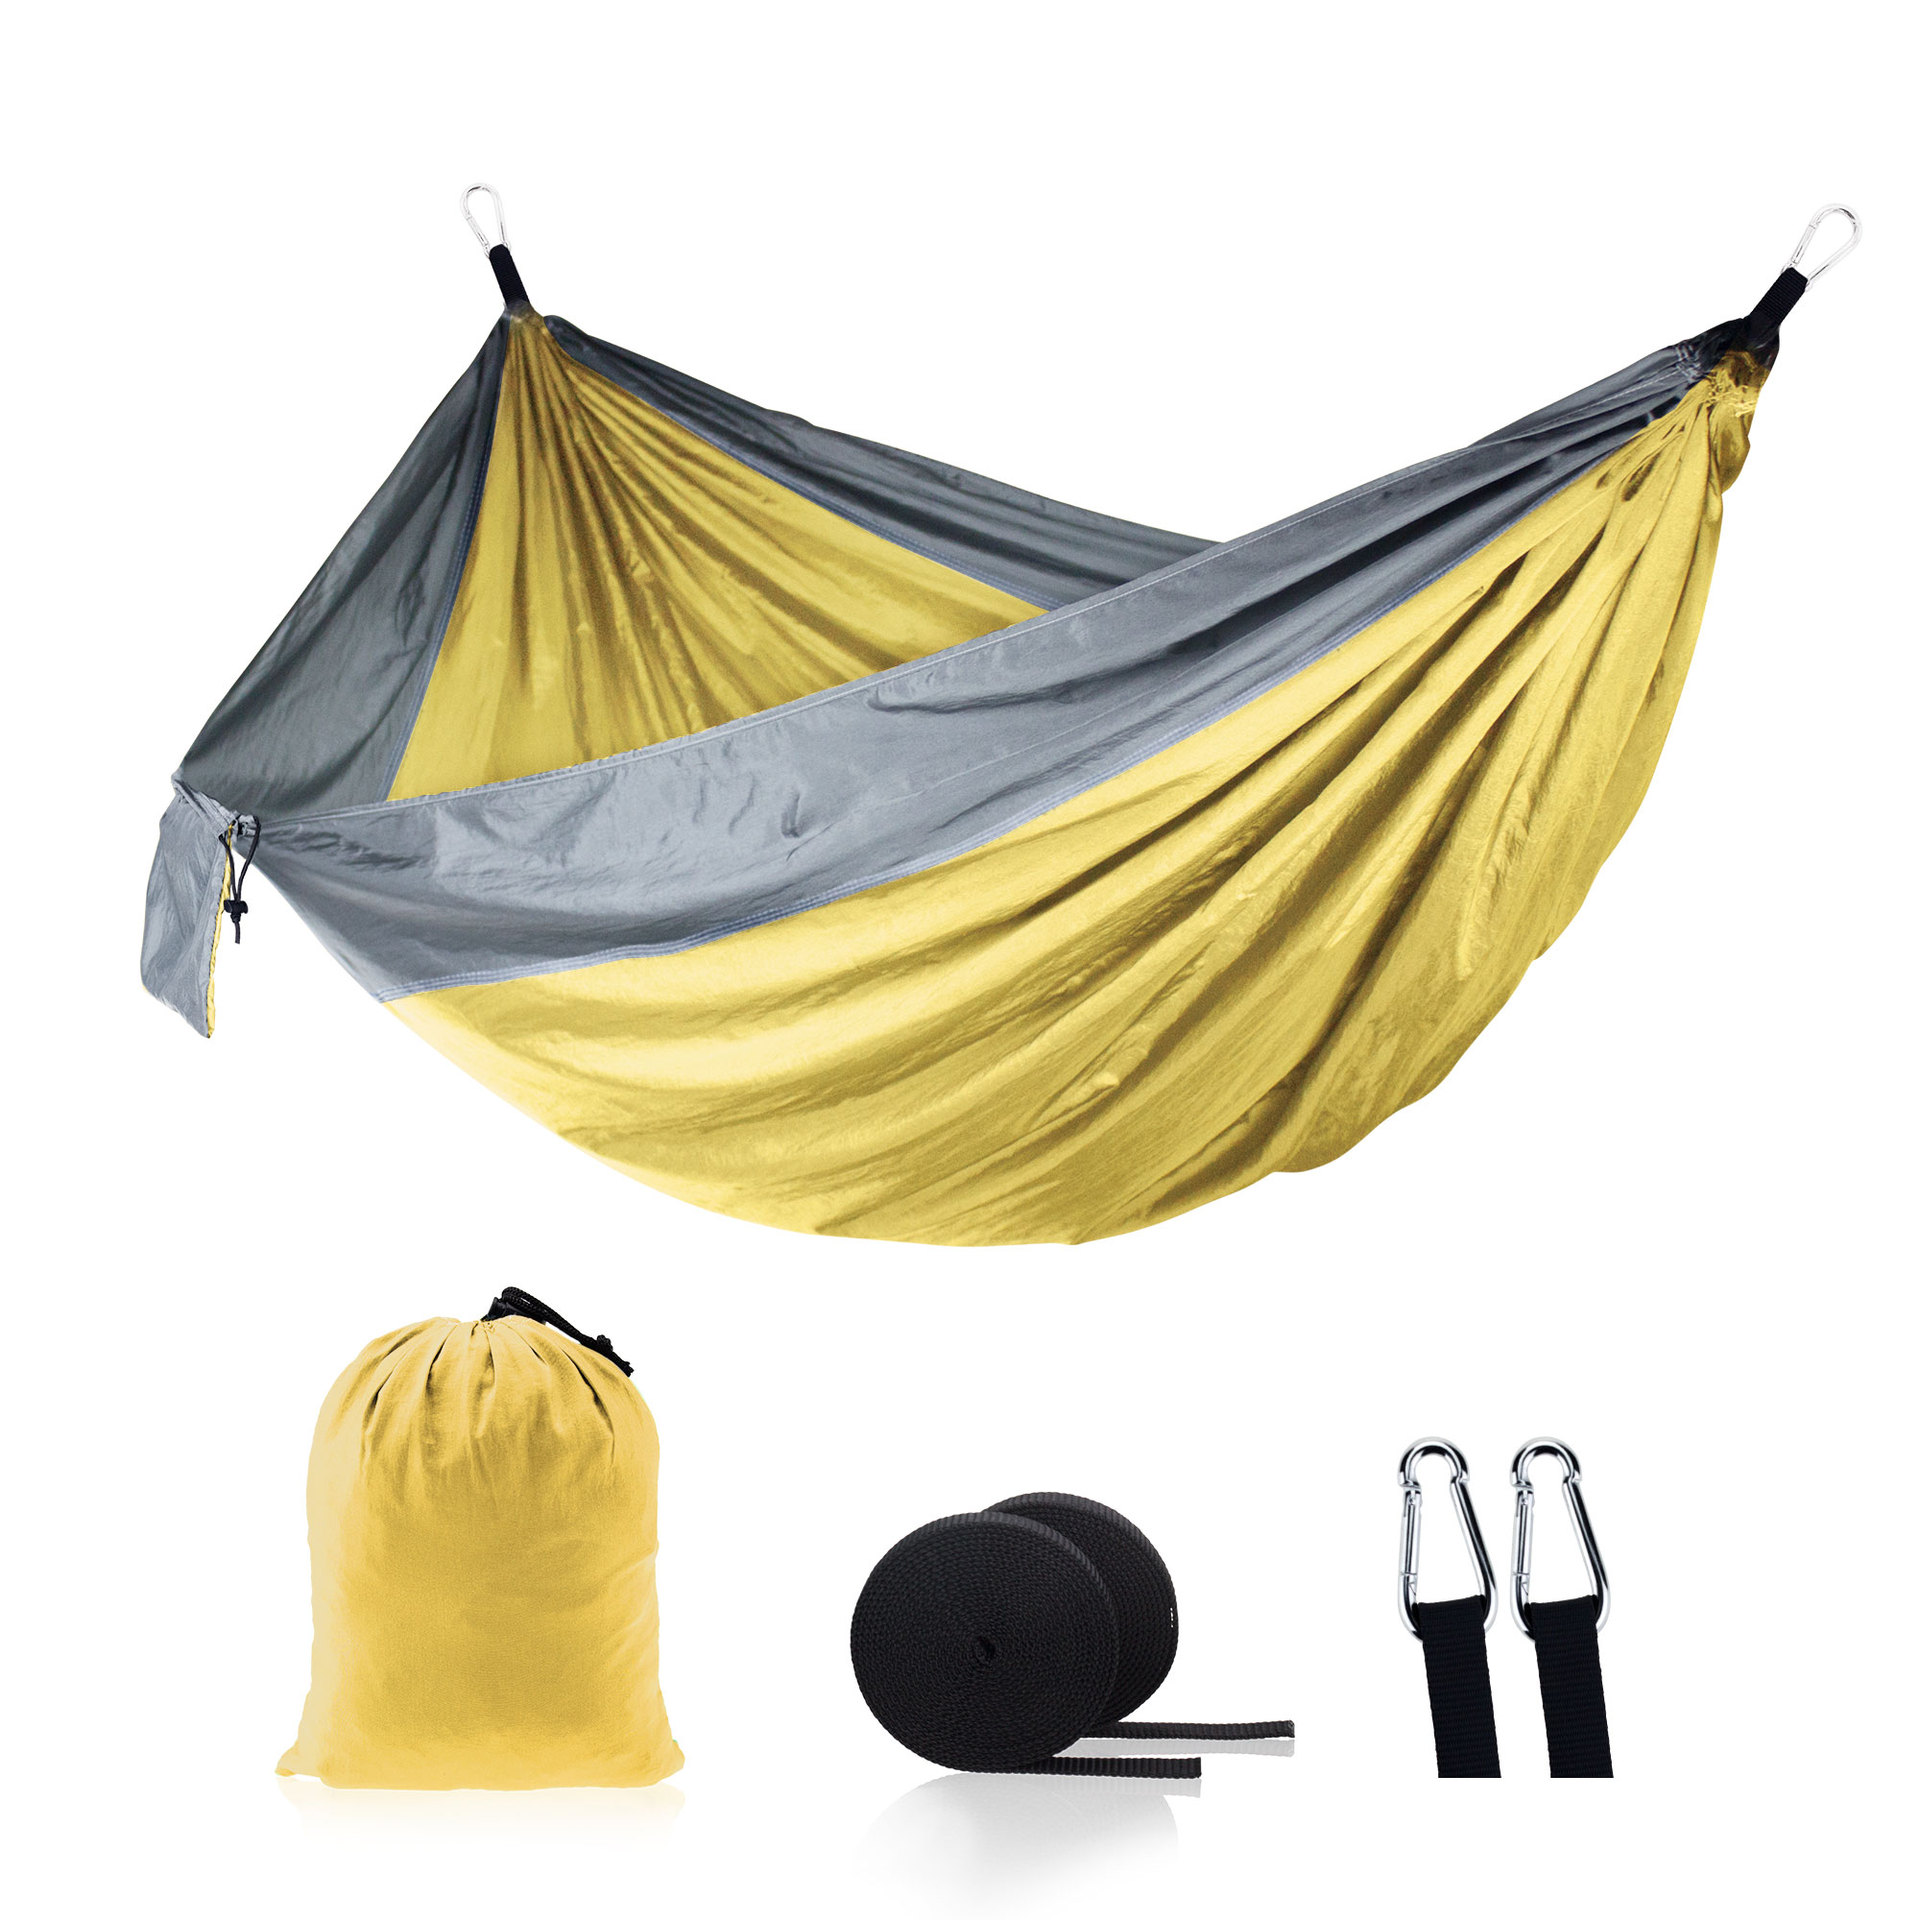 Backpacking travel camping hammock outdoor Parachute Nylon printed ultralight backpacking hammock